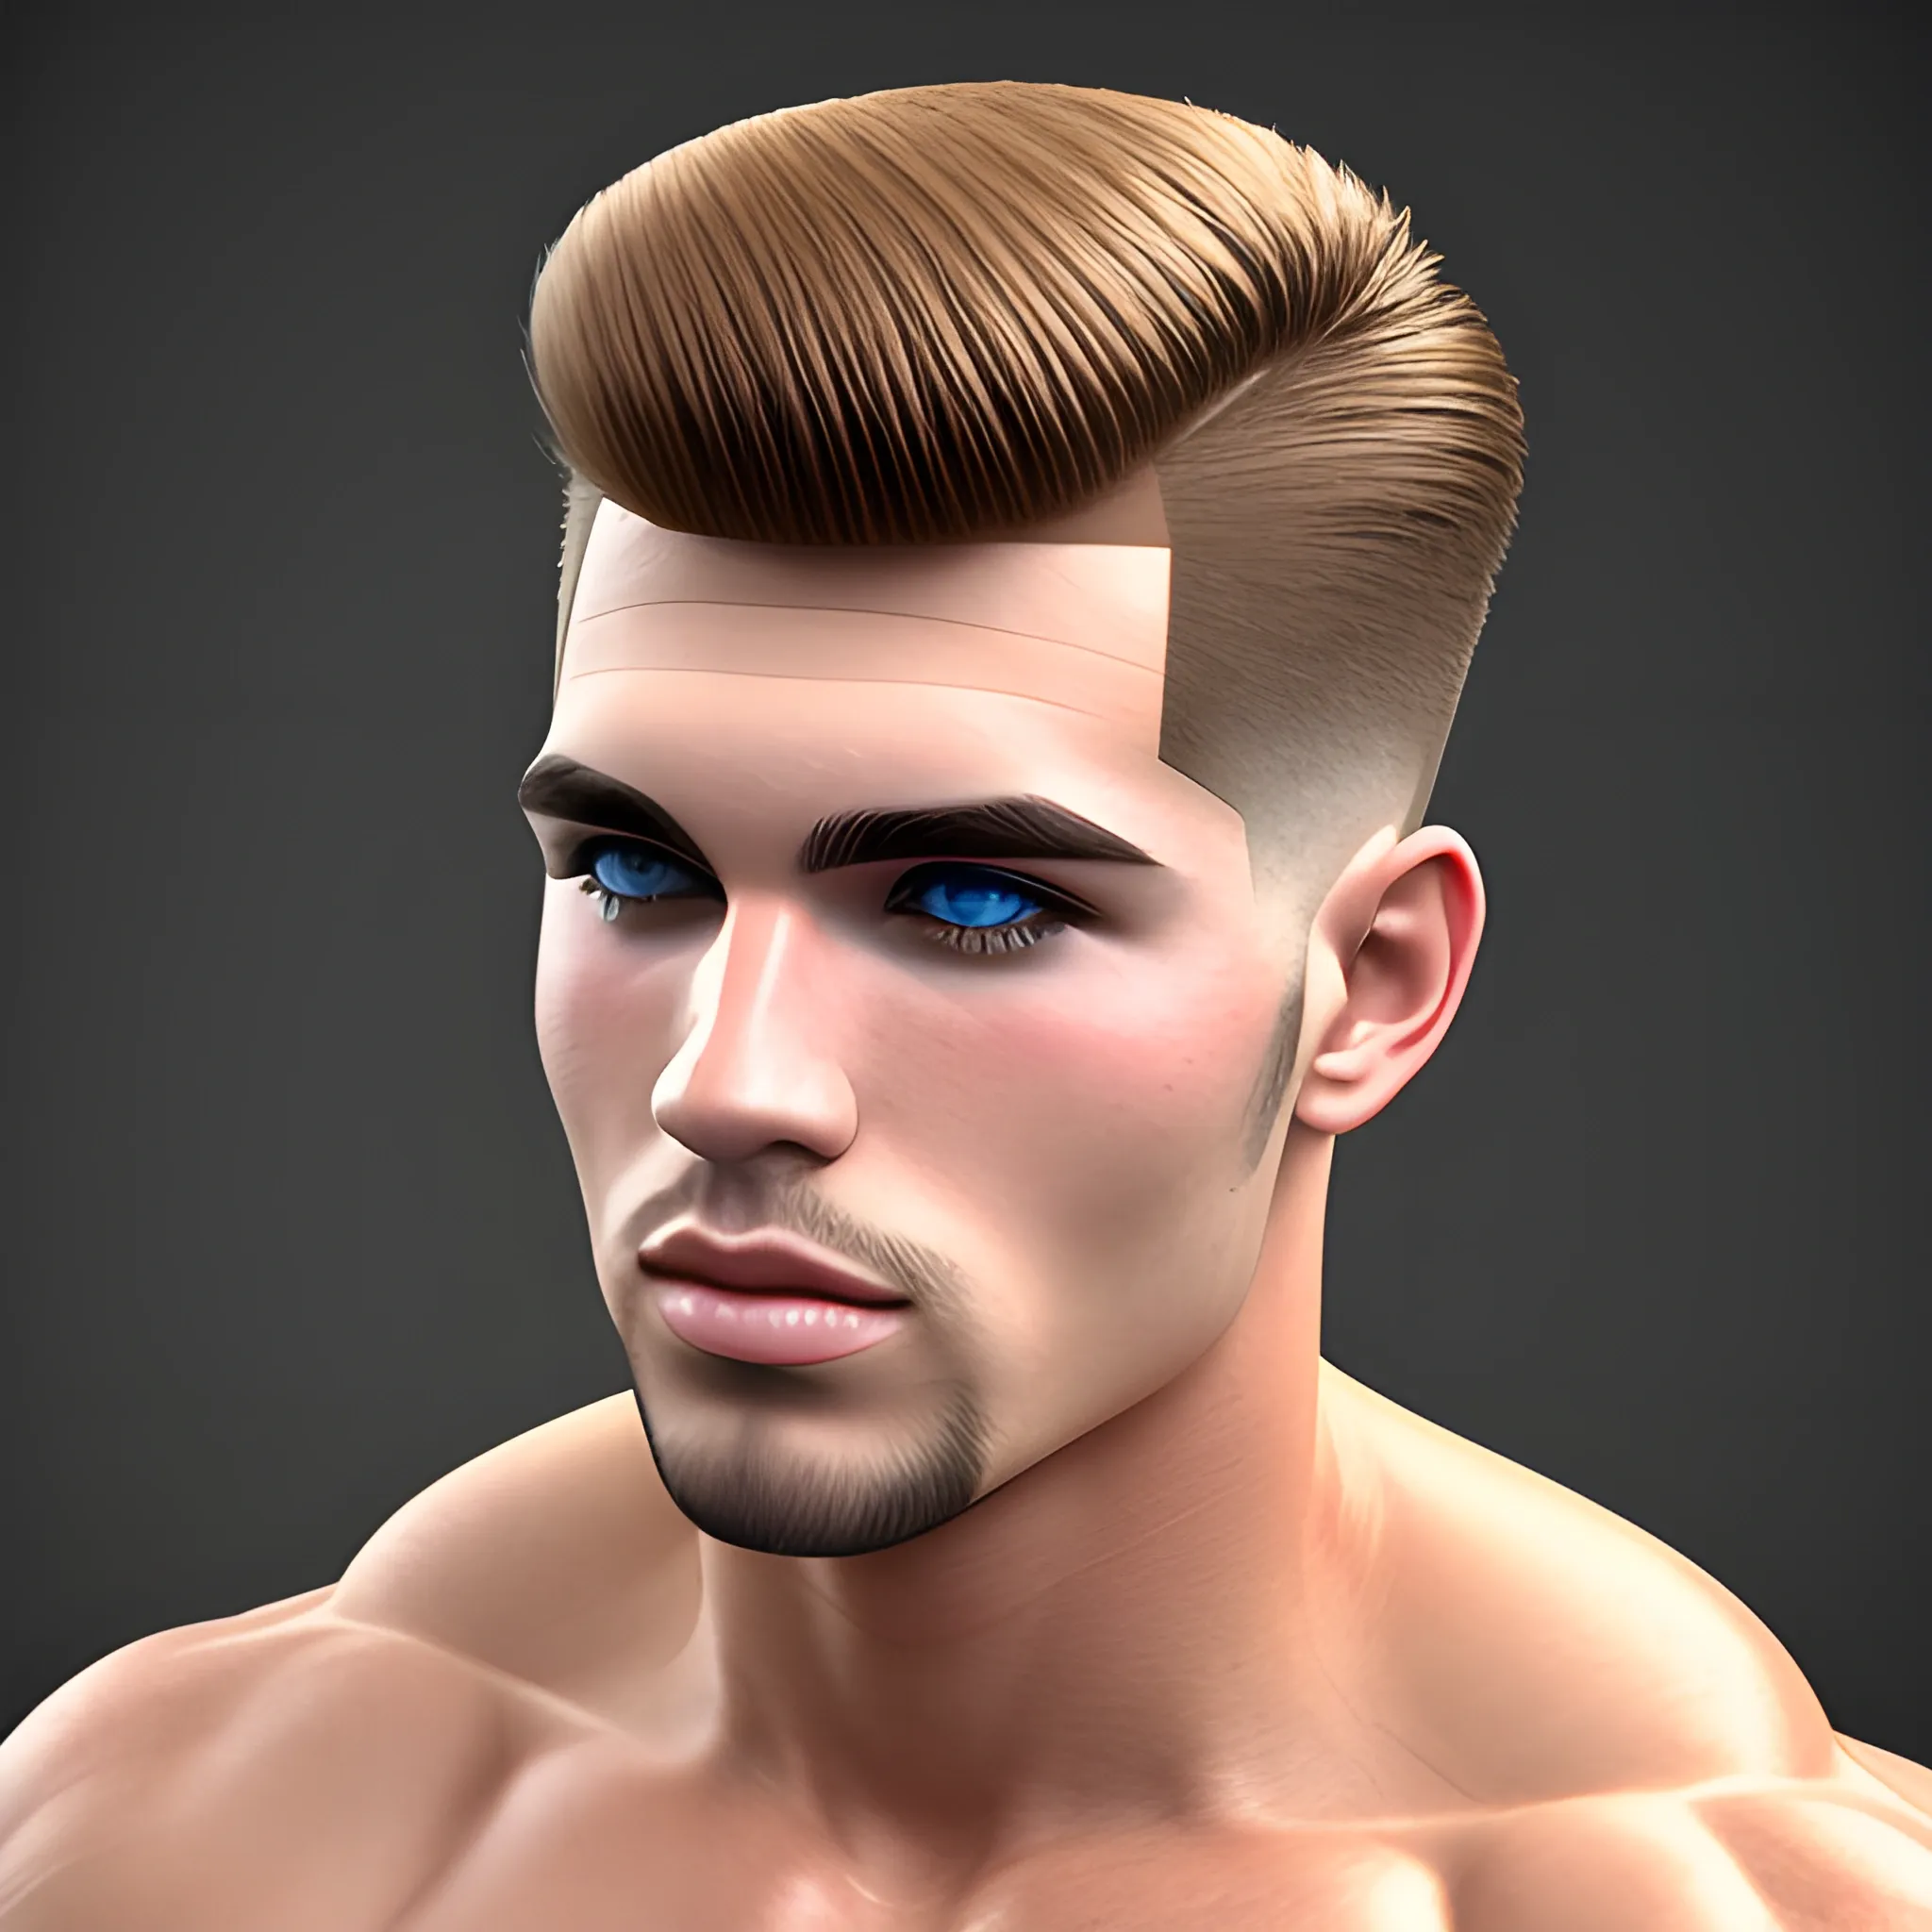 muscle male model 70s haircut
, 3D